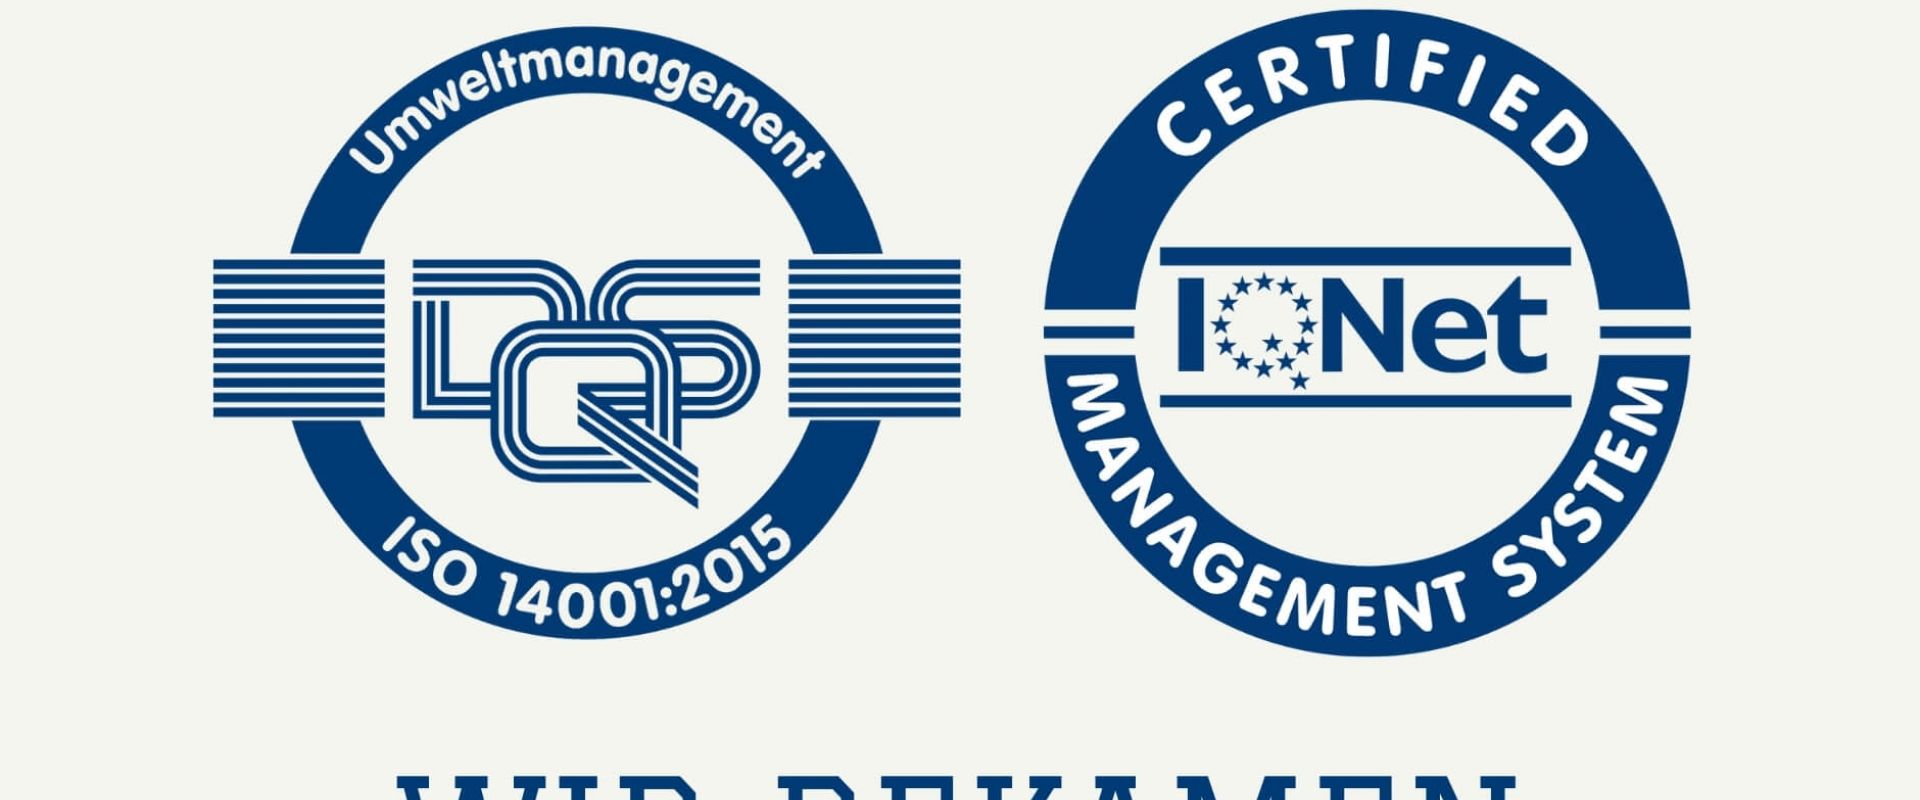 Vergabe des ISO 14001:2015 Zertifikats an HERMI